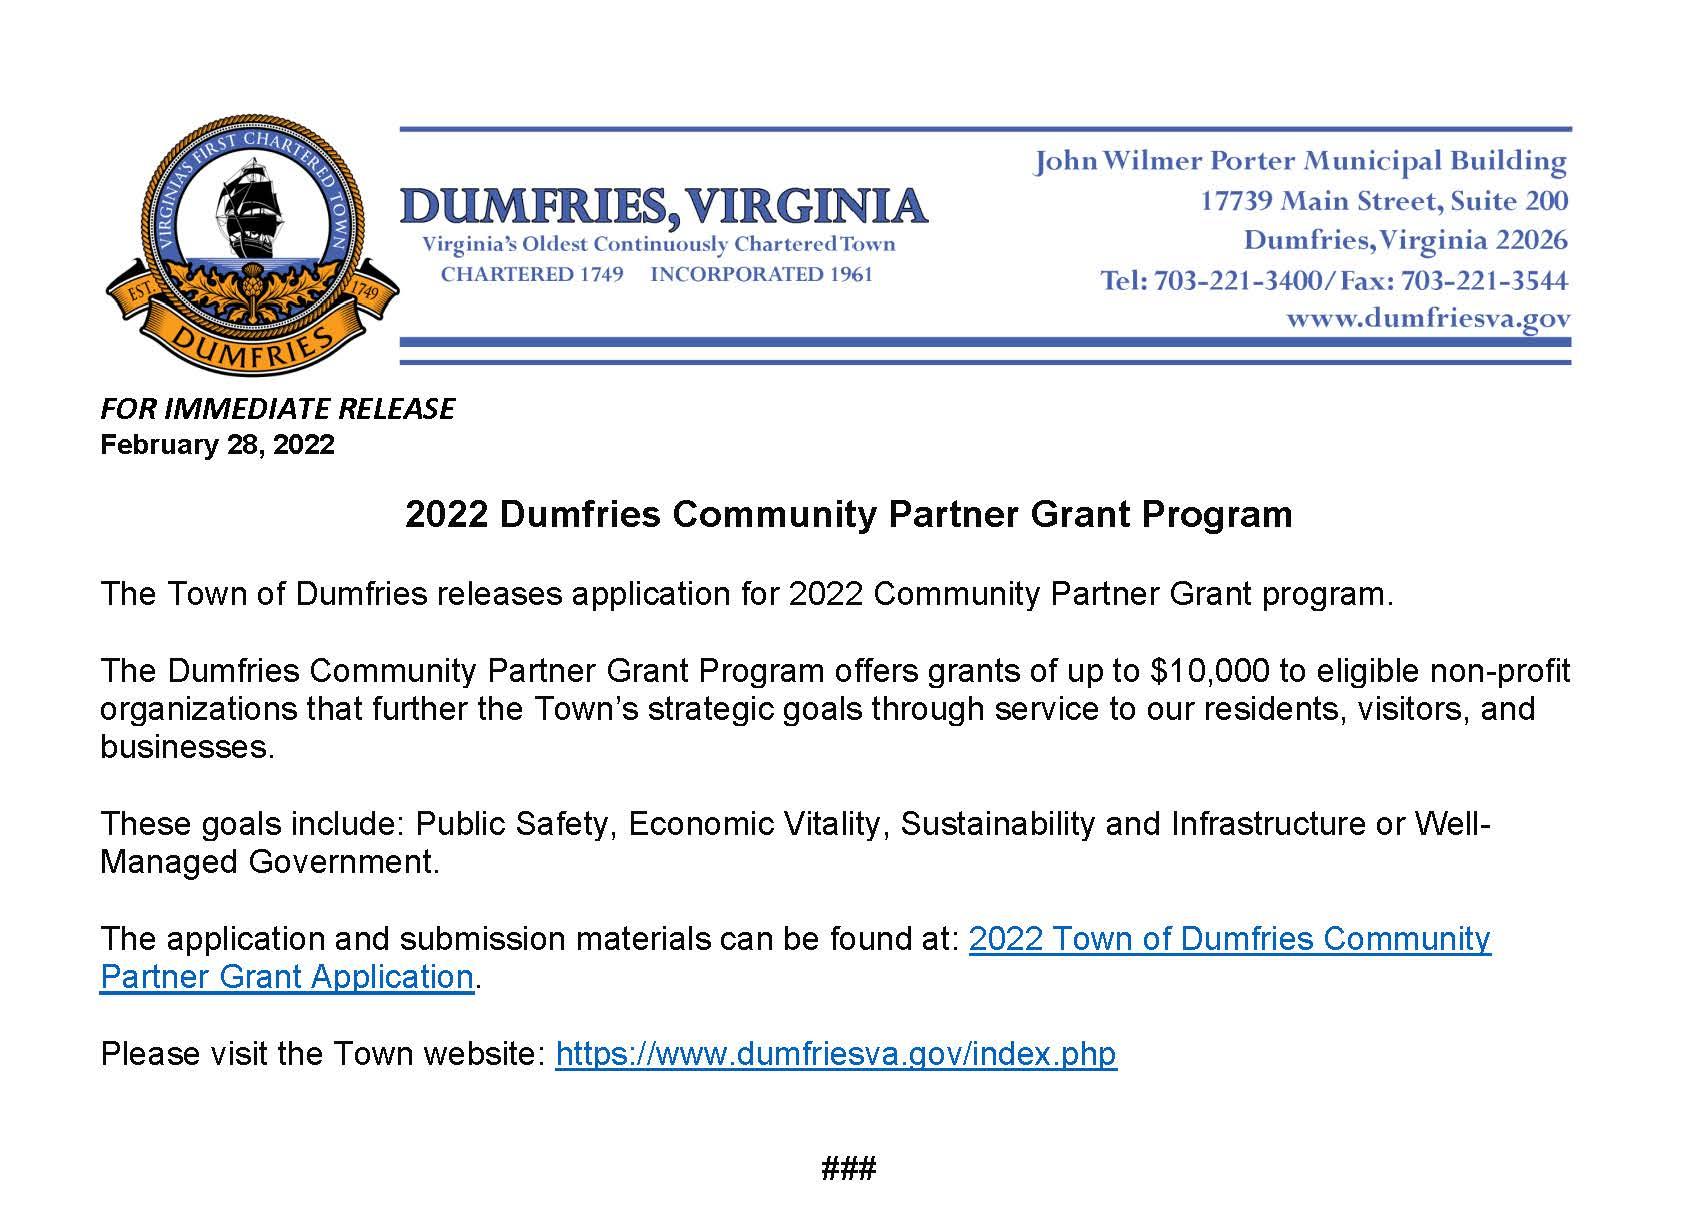 2022 Community Partner Grant Program Press Release - Copy (2)